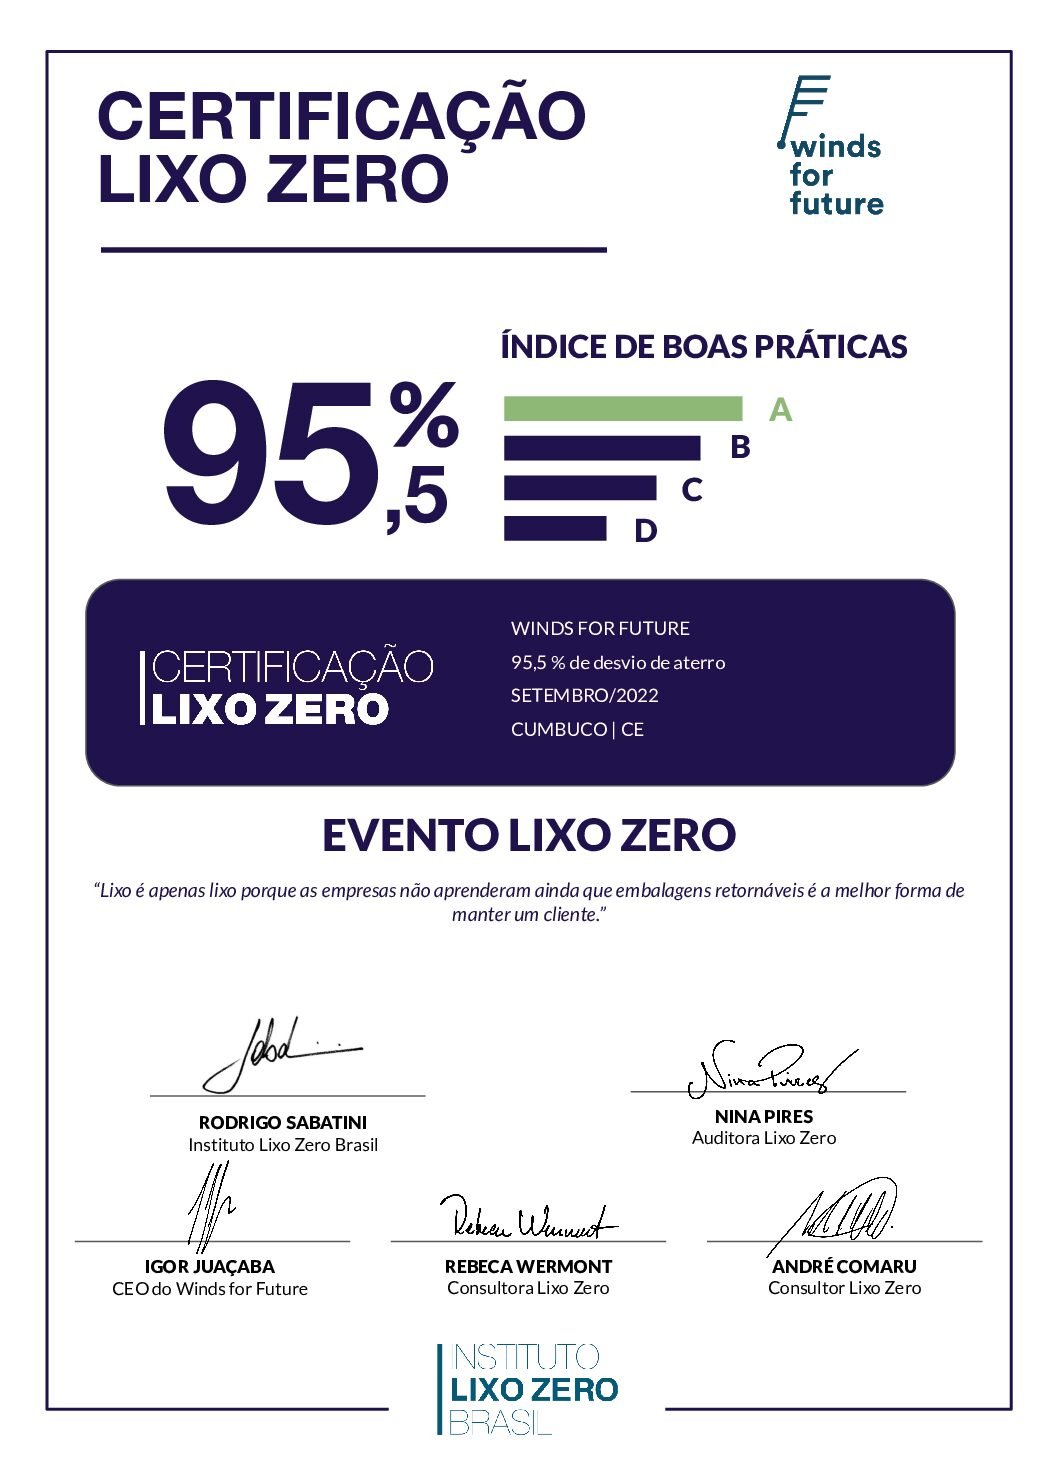 CertificaçãoLixoZero_Evento Winds For Future_CE_Setembro_2022 (1)